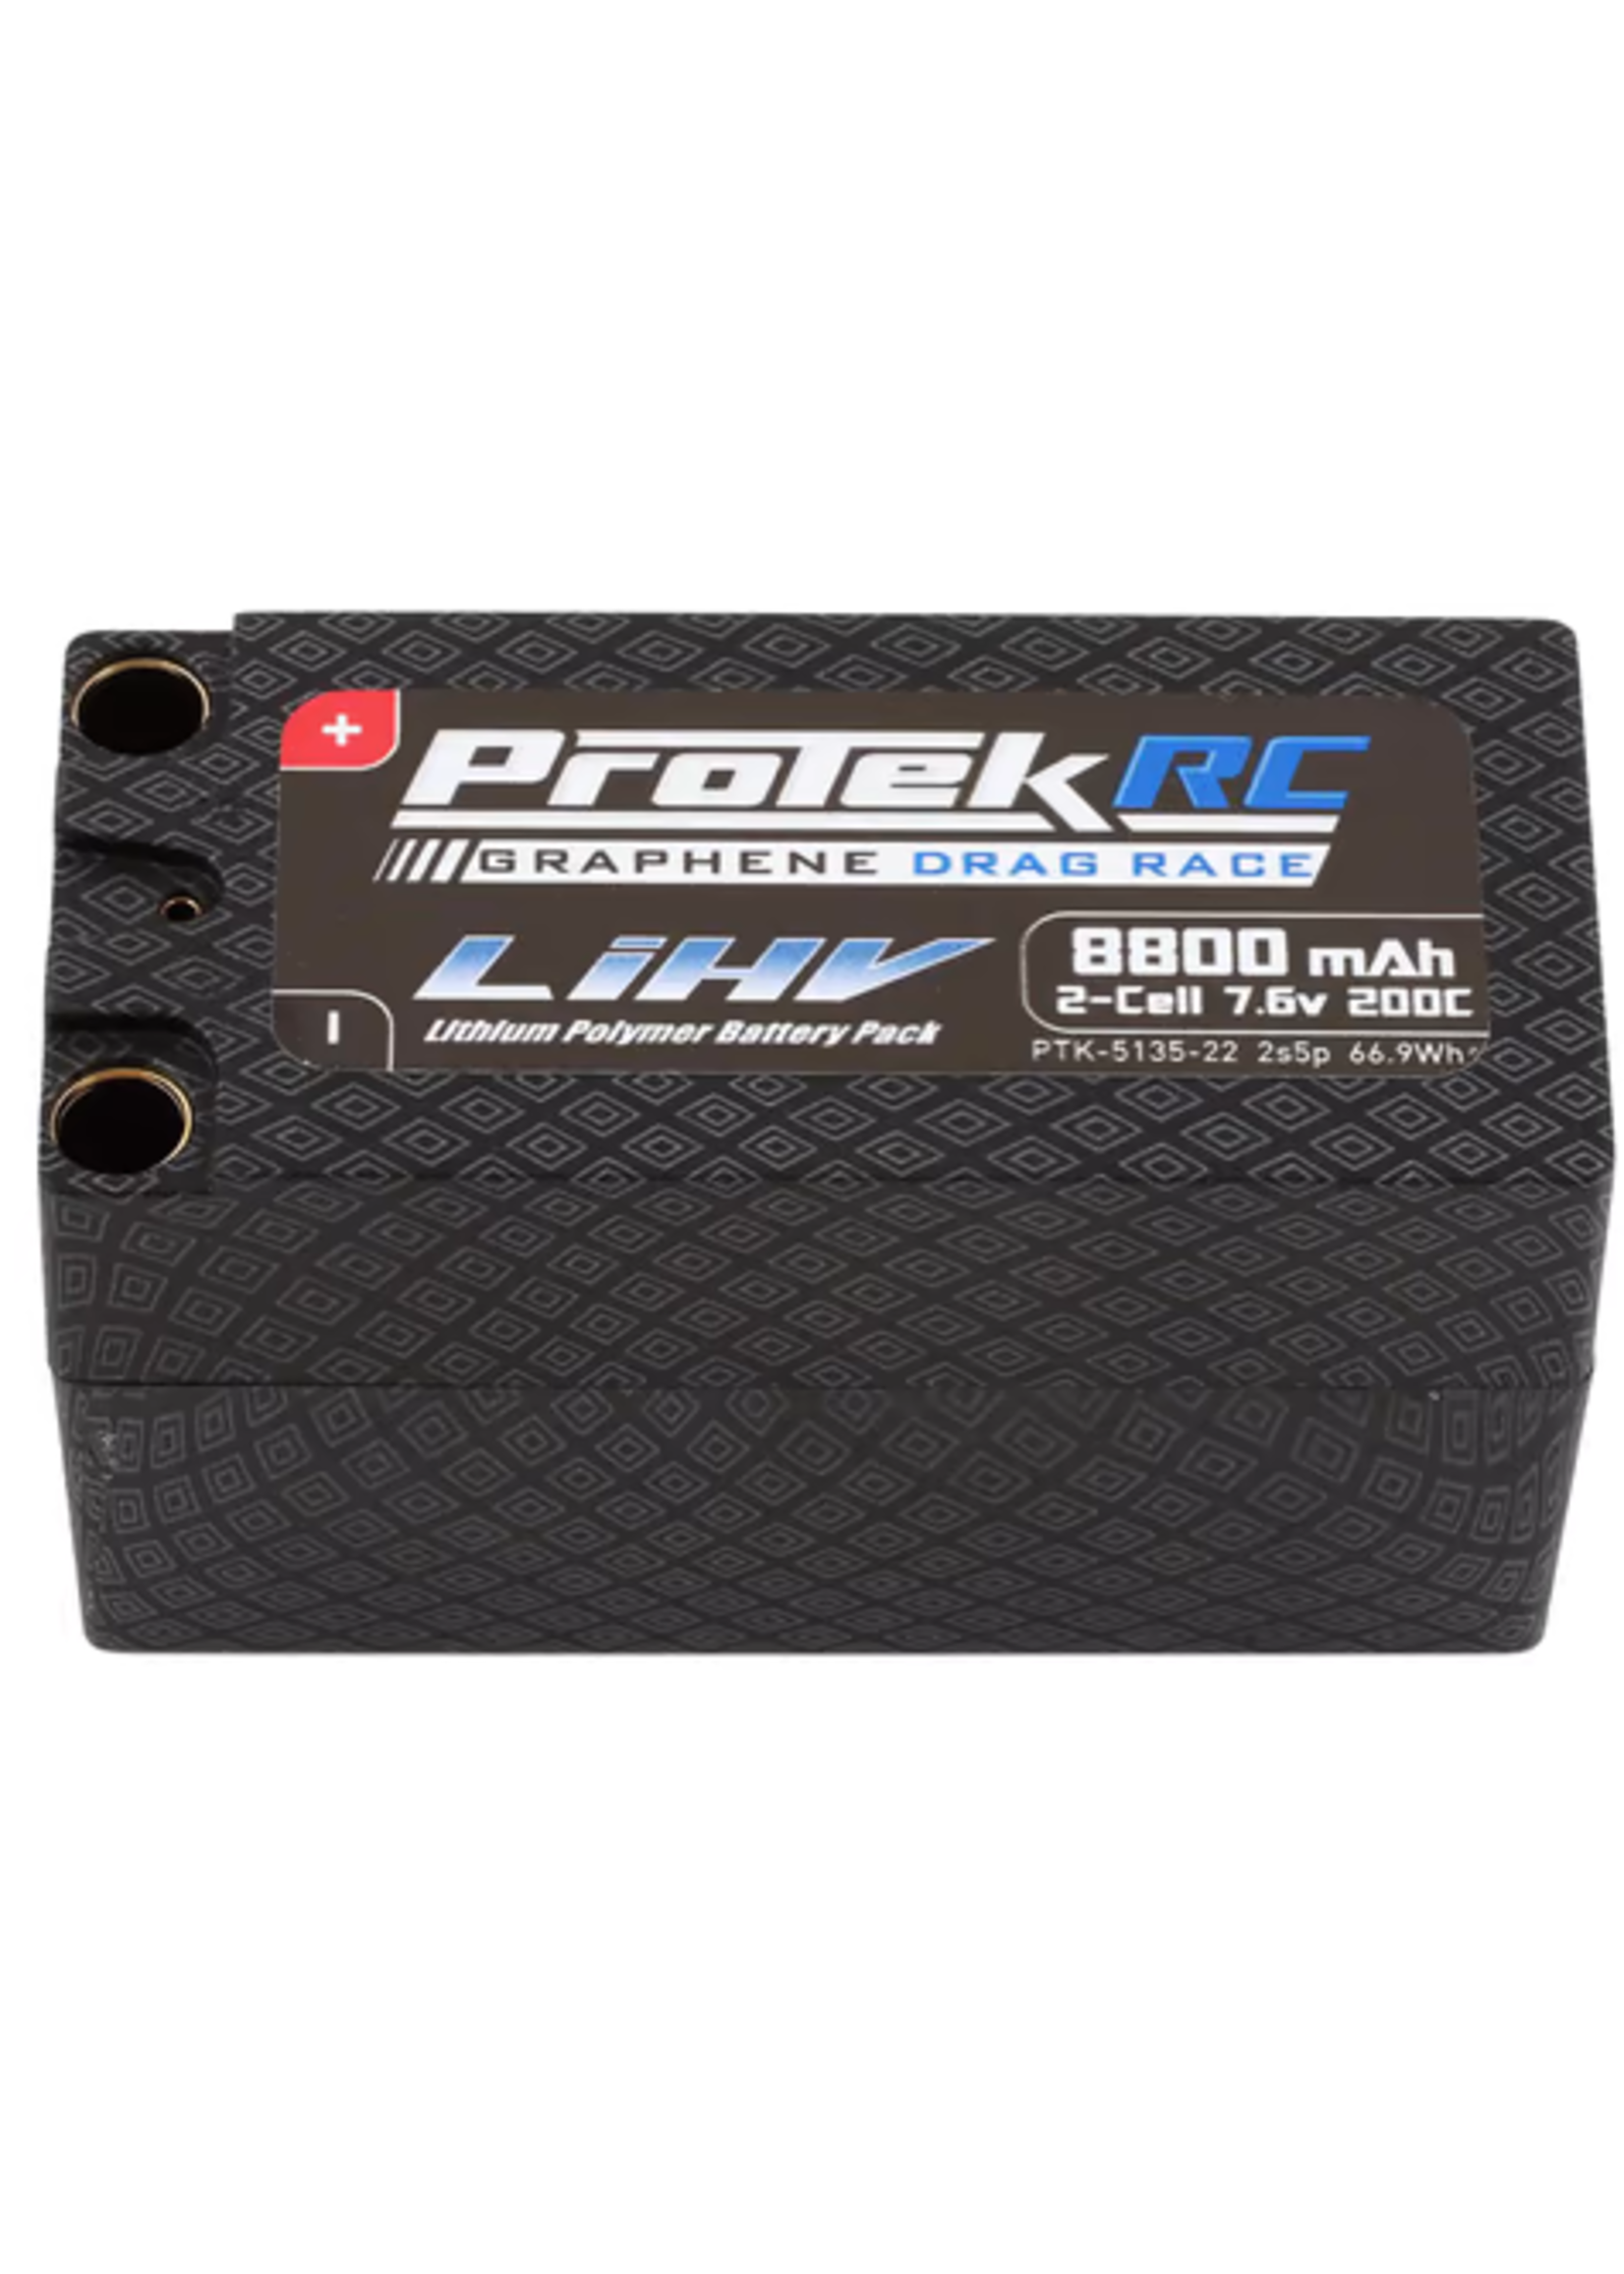 ProTek RC PTK-5135-22 ProTek RC 2S 200C 2s5p Si-Graphene Drag Race Shorty LiPo Battery (7.6V/8800mAh) w/8mm Connectors